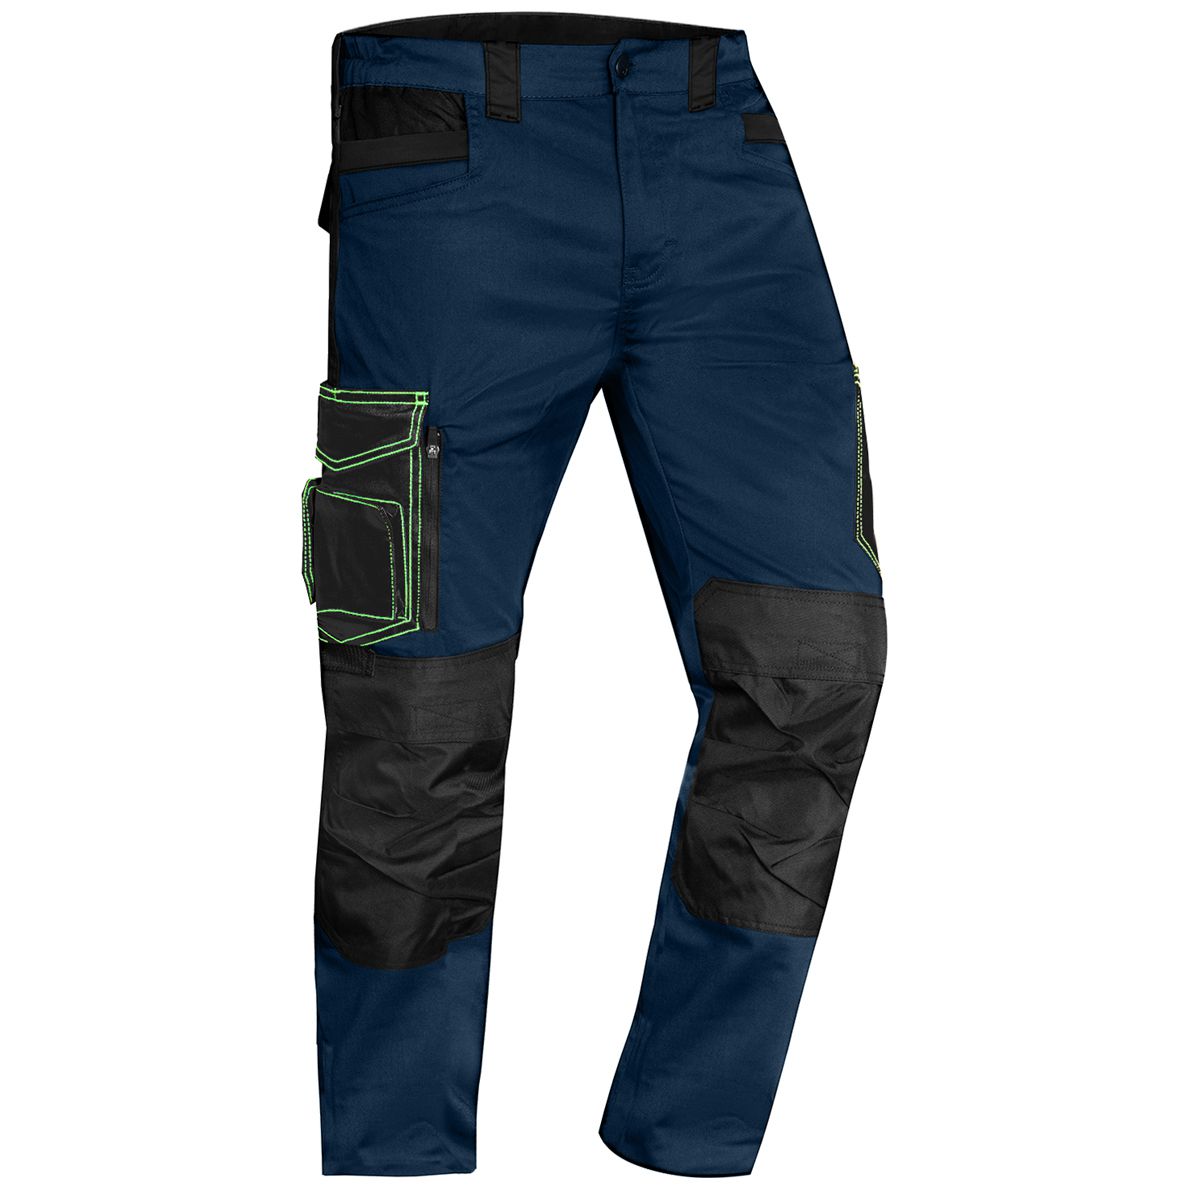 ACE Genesis Men's Work Trousers Long - Men's Cargo Trousers for Work - Stretch Waistband & Knee Pockets - Dark Blue - 46